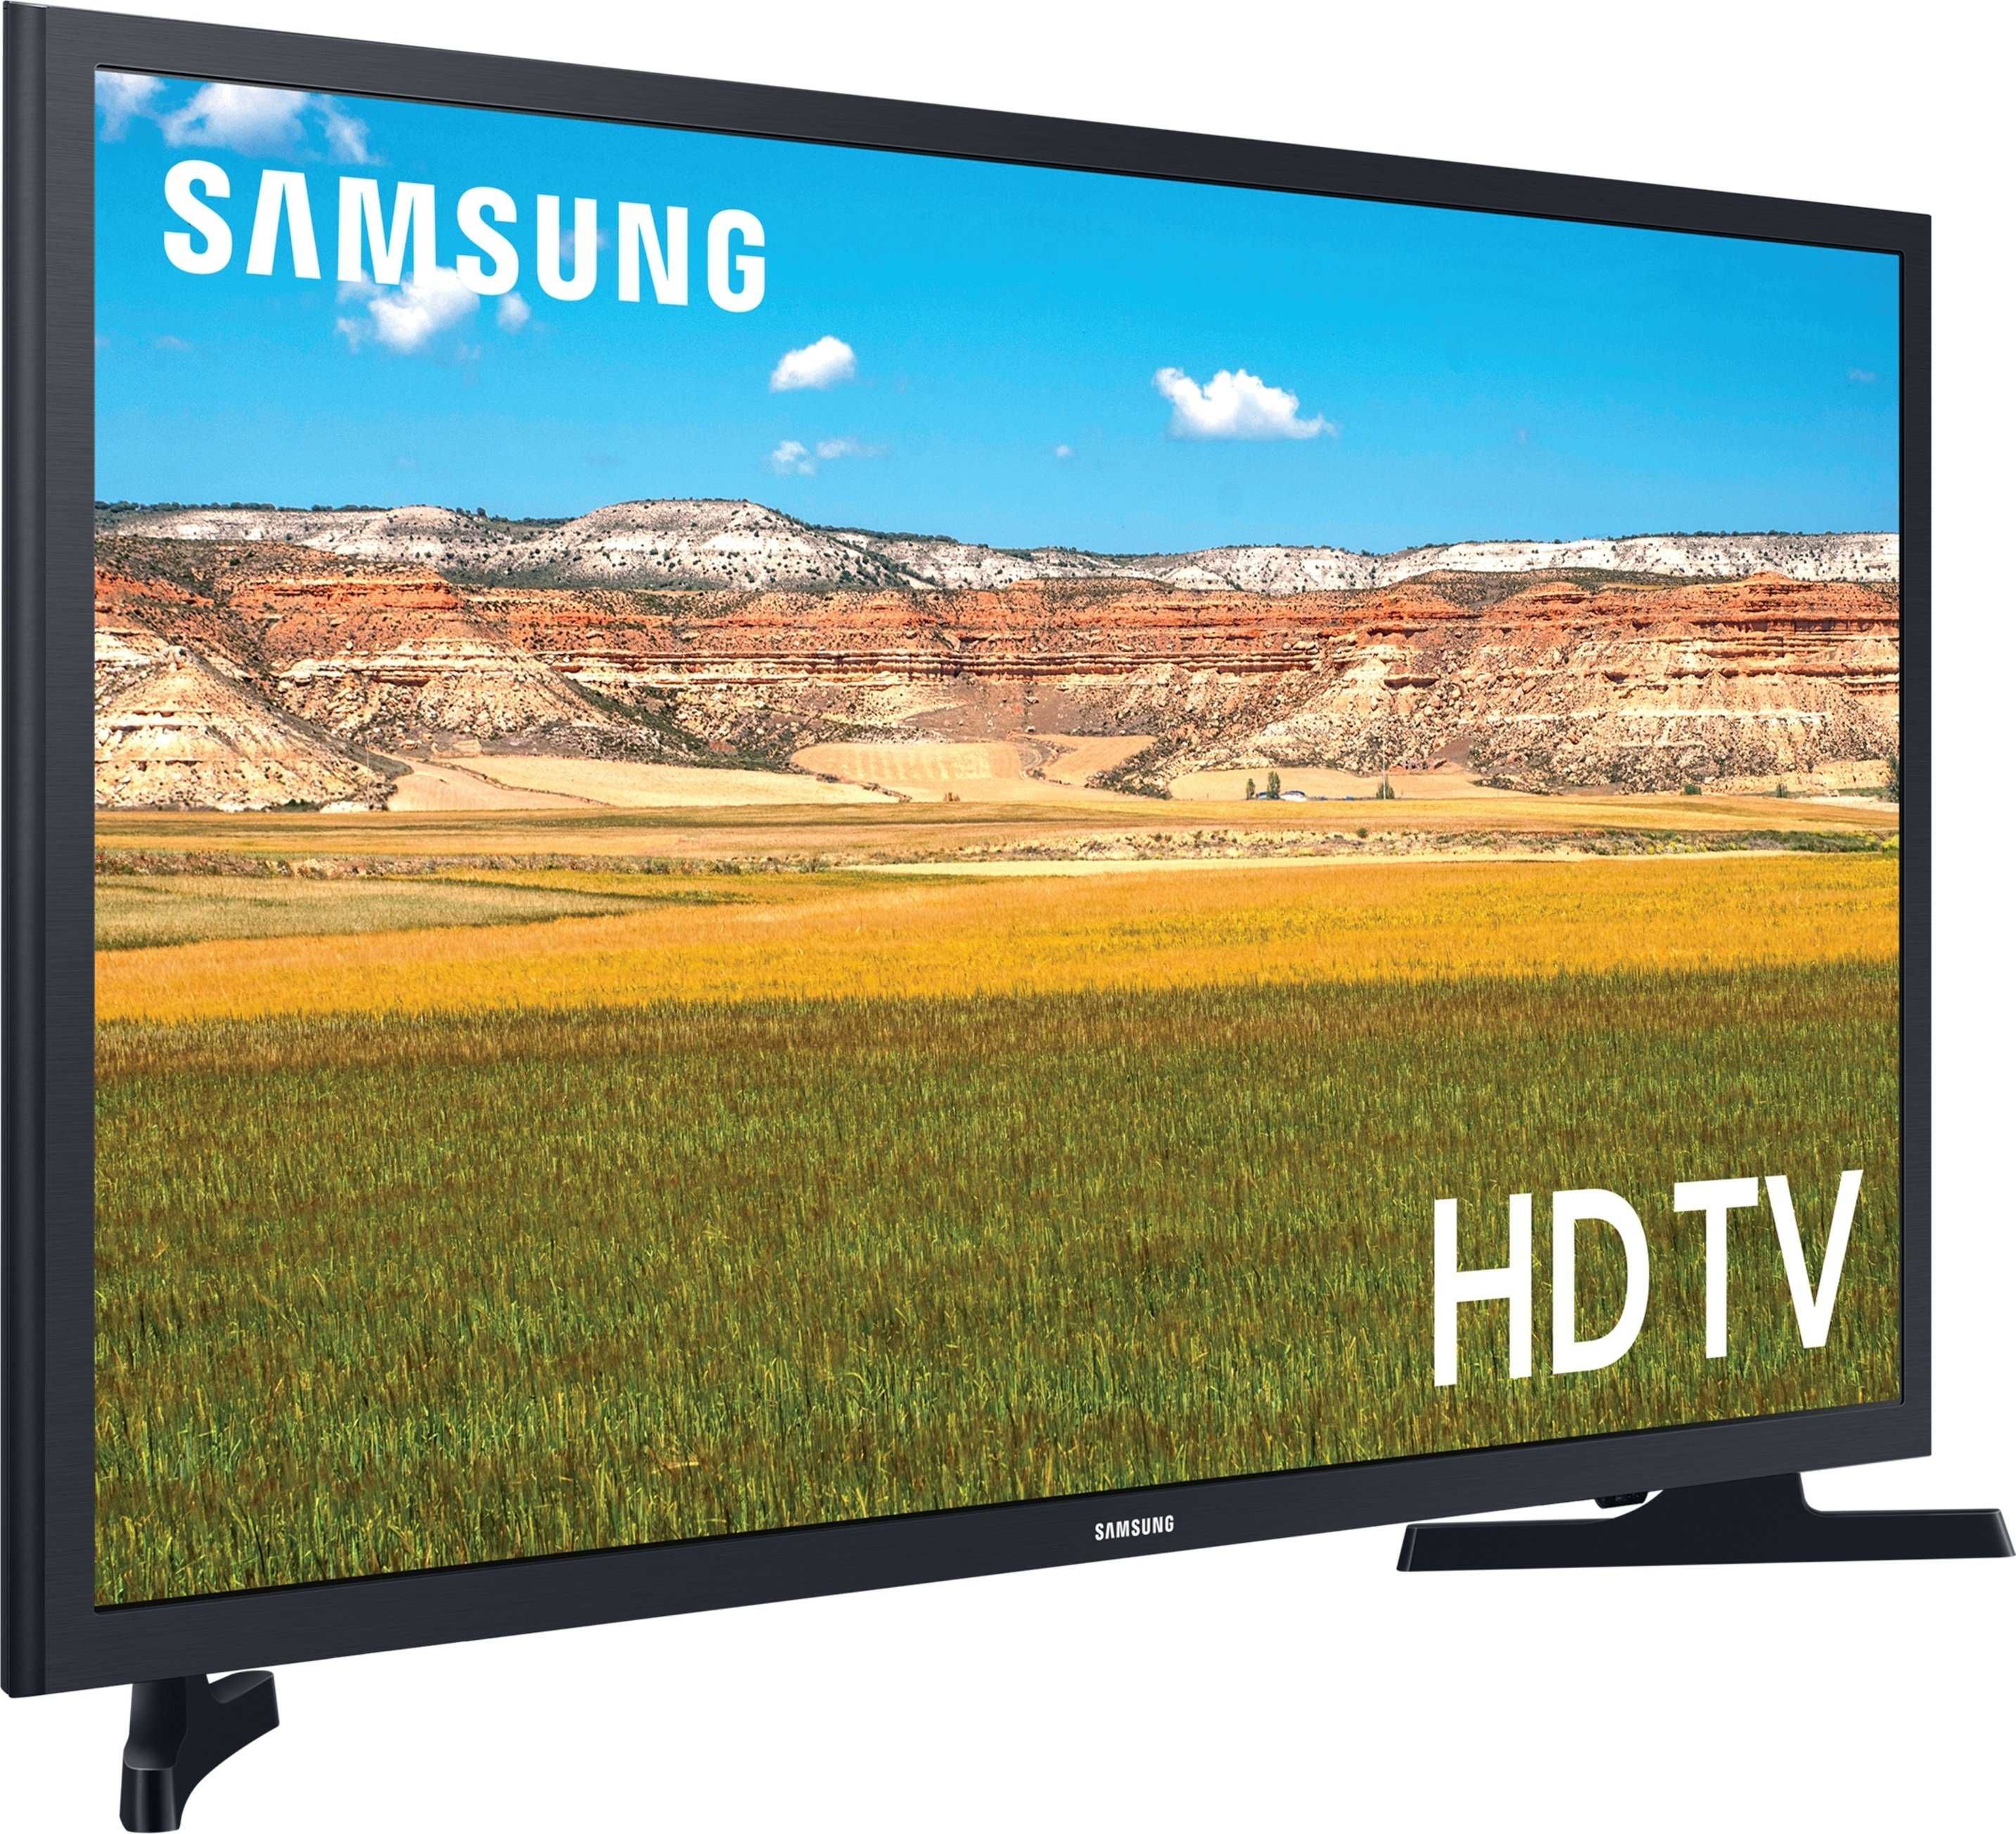 Распродажа! Телевизор 32" Samsung UE32T4002 (DVB-T2/C ELED HDMI USB)